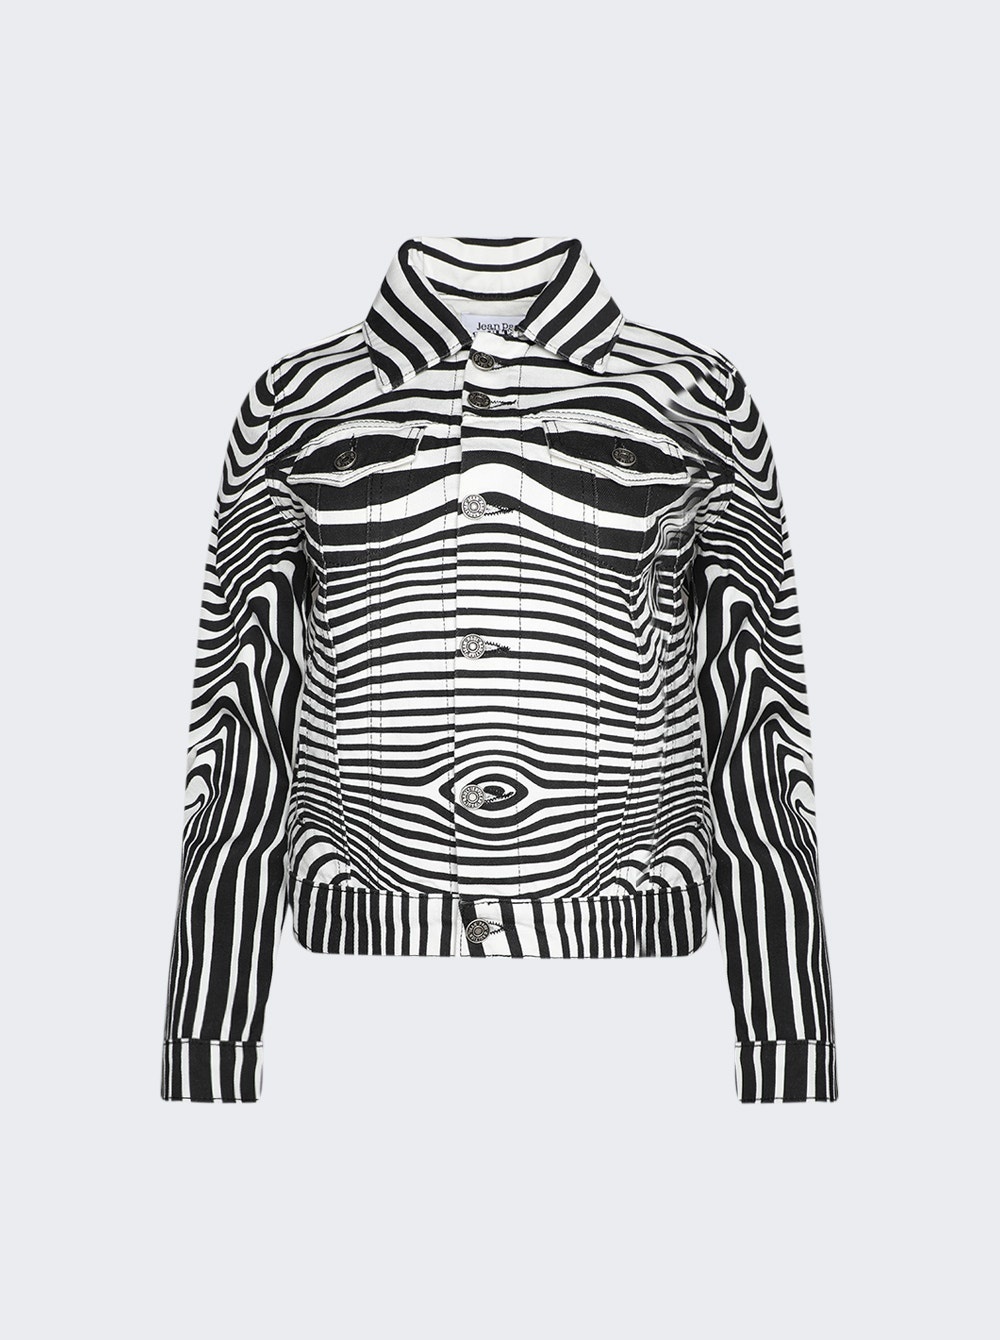 Body Morphing Printed Denim Jacket Black And White - 1